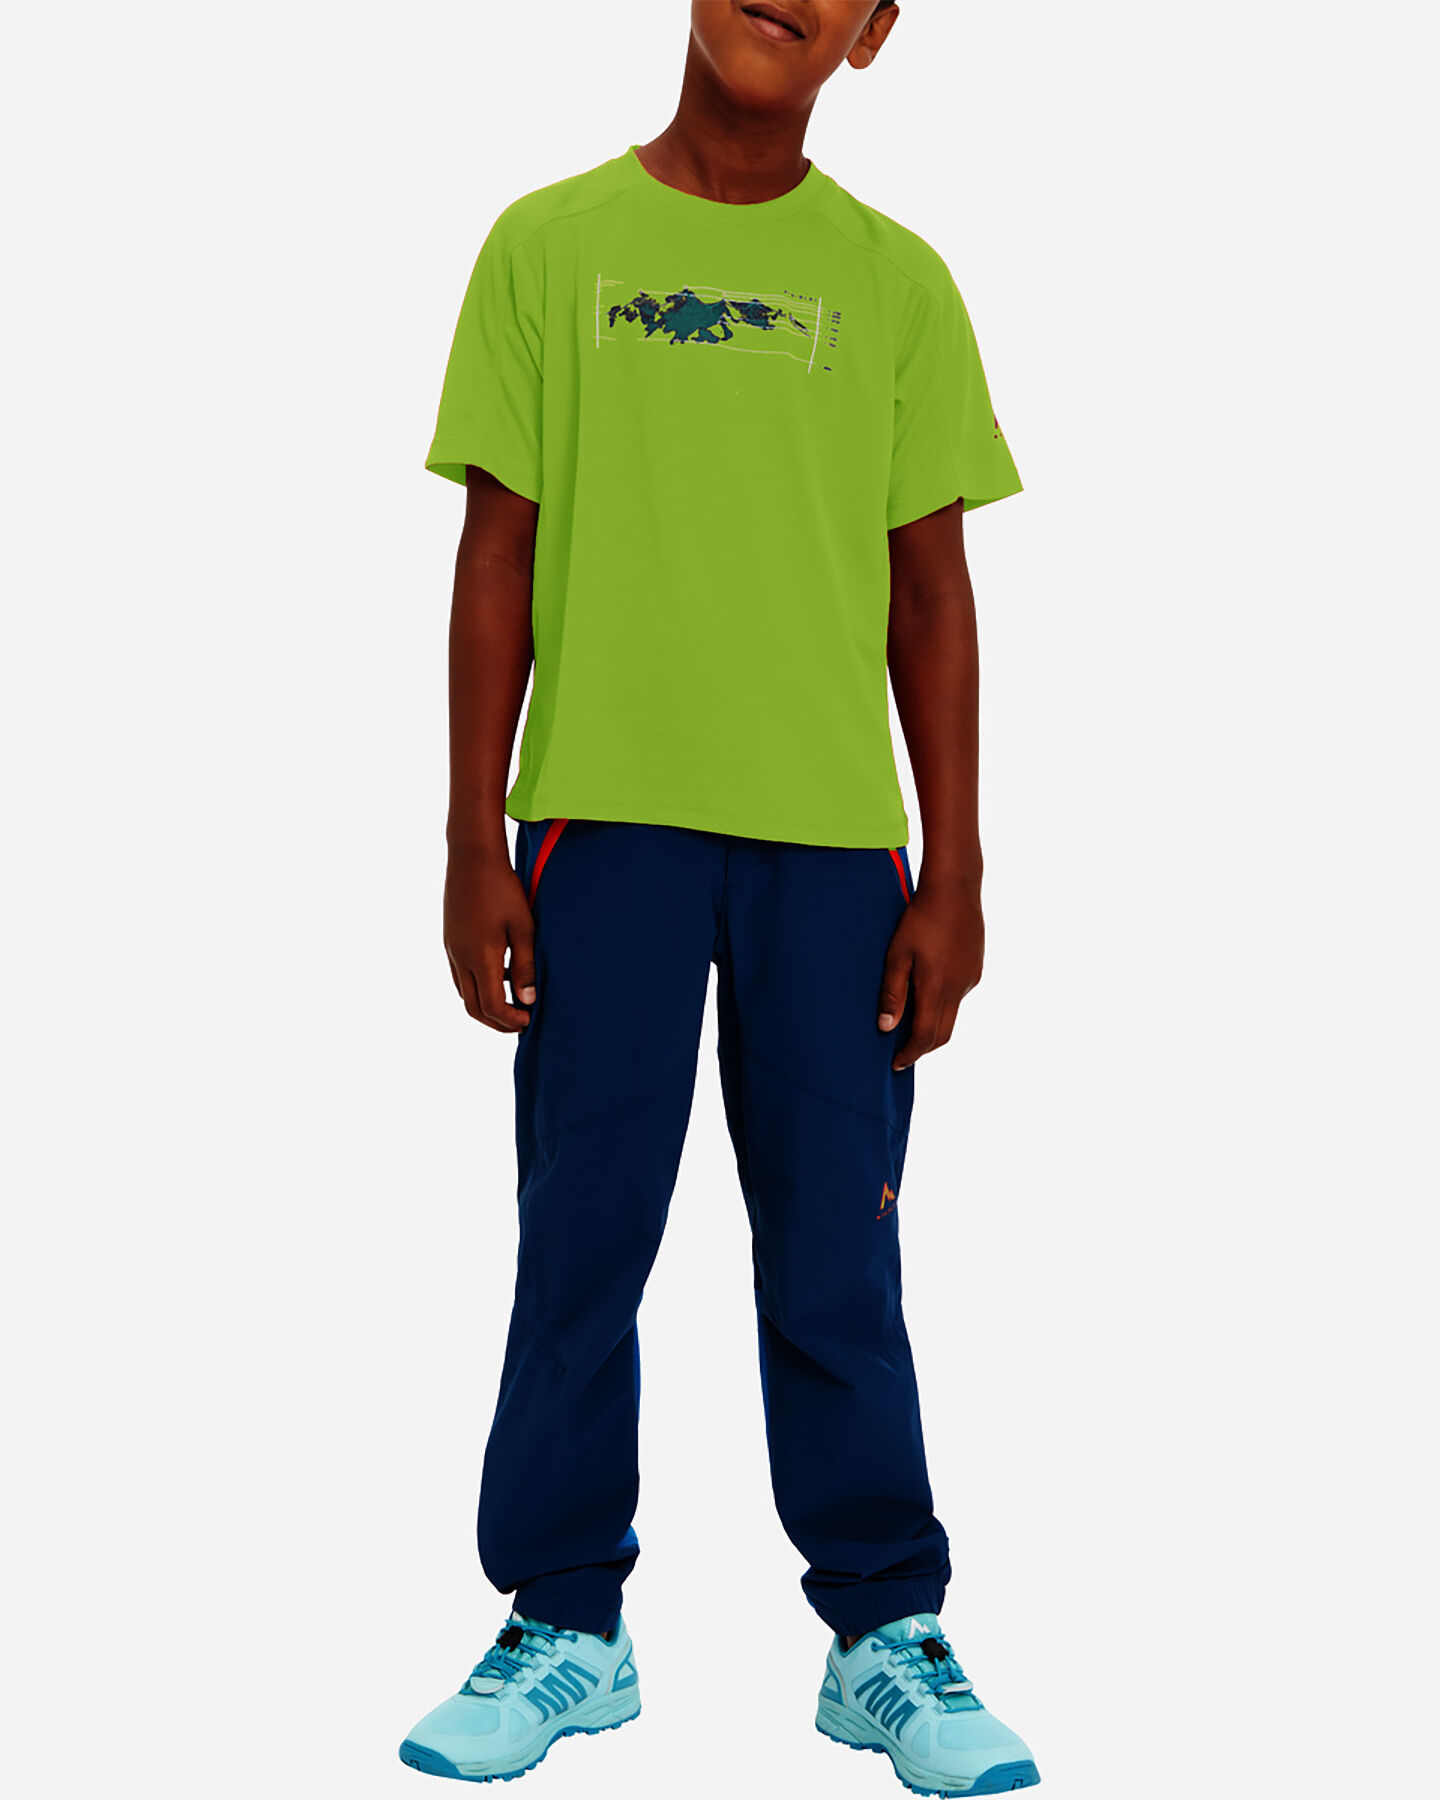  T-Shirt MCKINLEY CORMA III JR S5511153|694|128 scatto 2